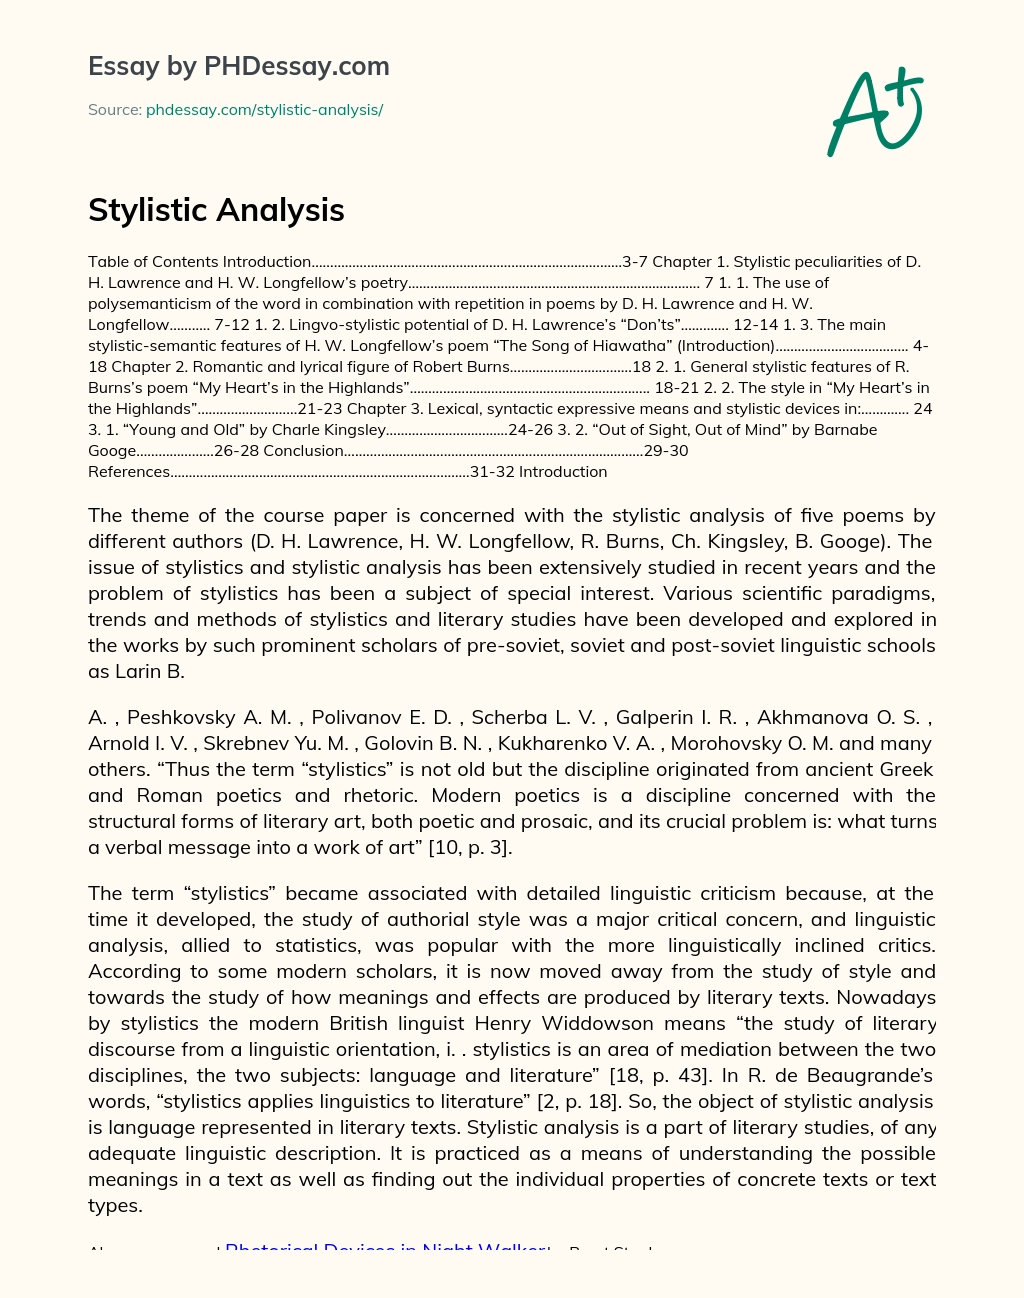 Stylistic Analysis essay